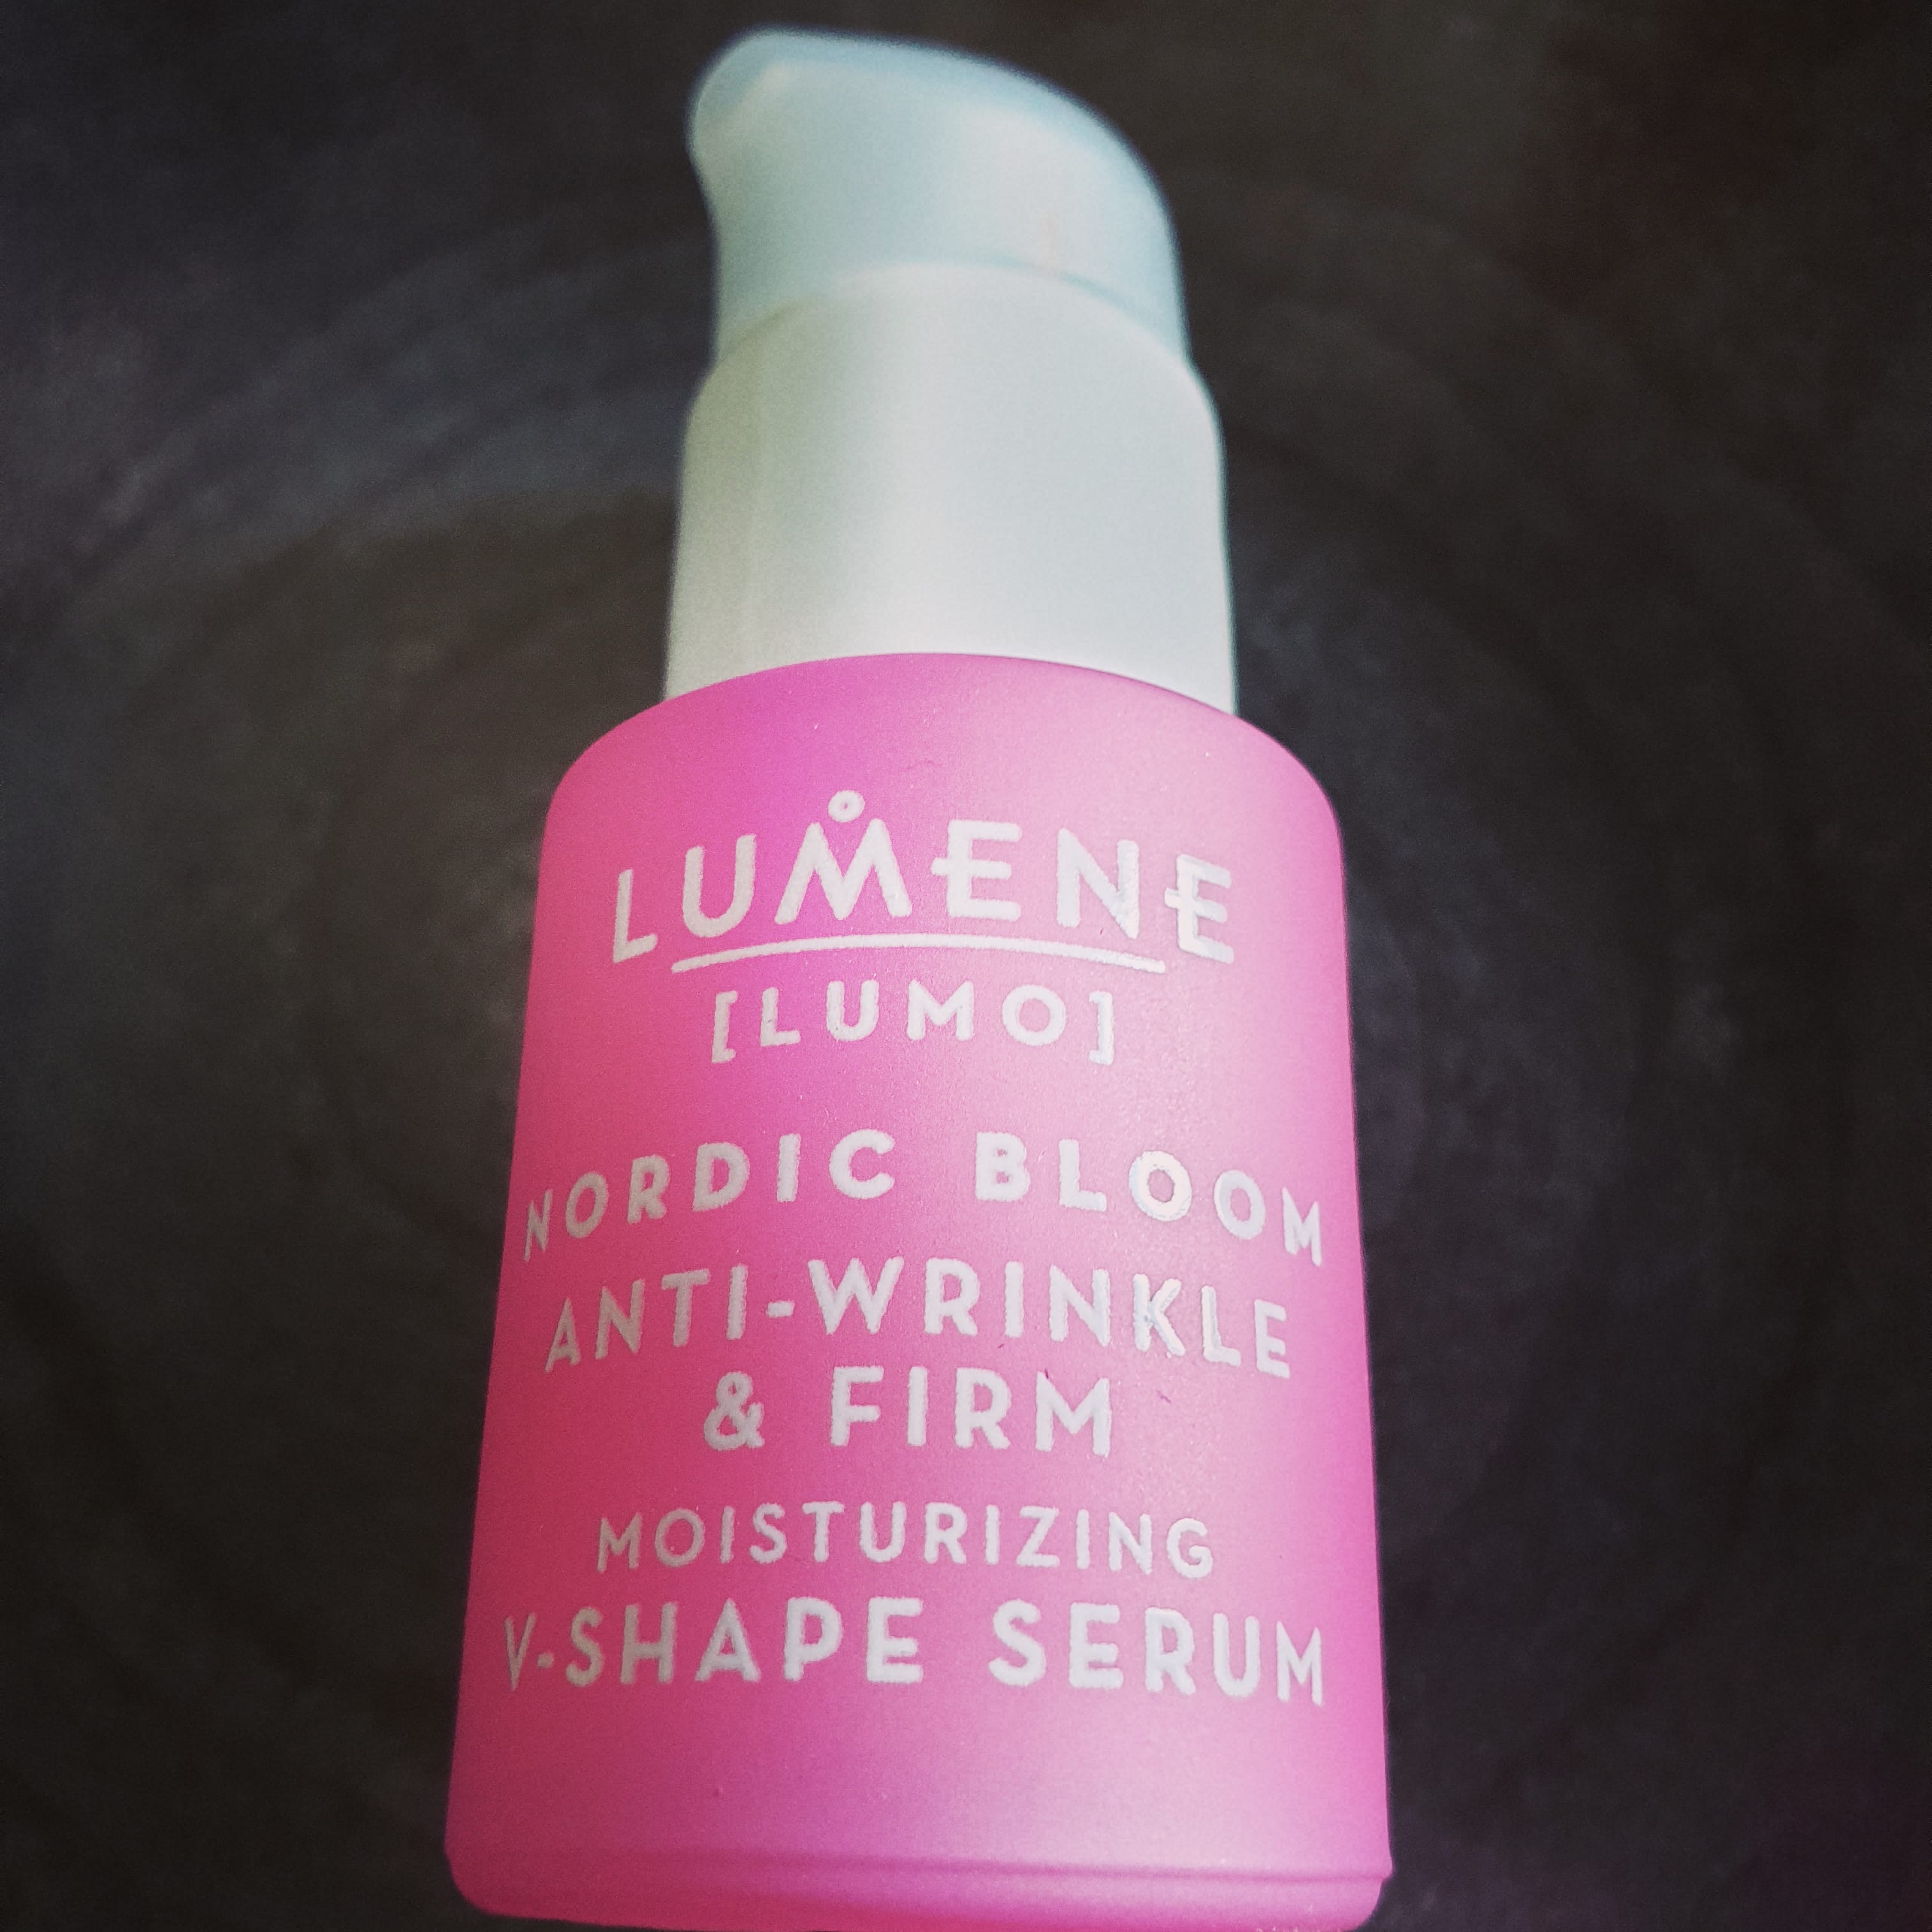 Anti-wrinkle & Firm Moisturizing V-Shape Serum – Lumene US